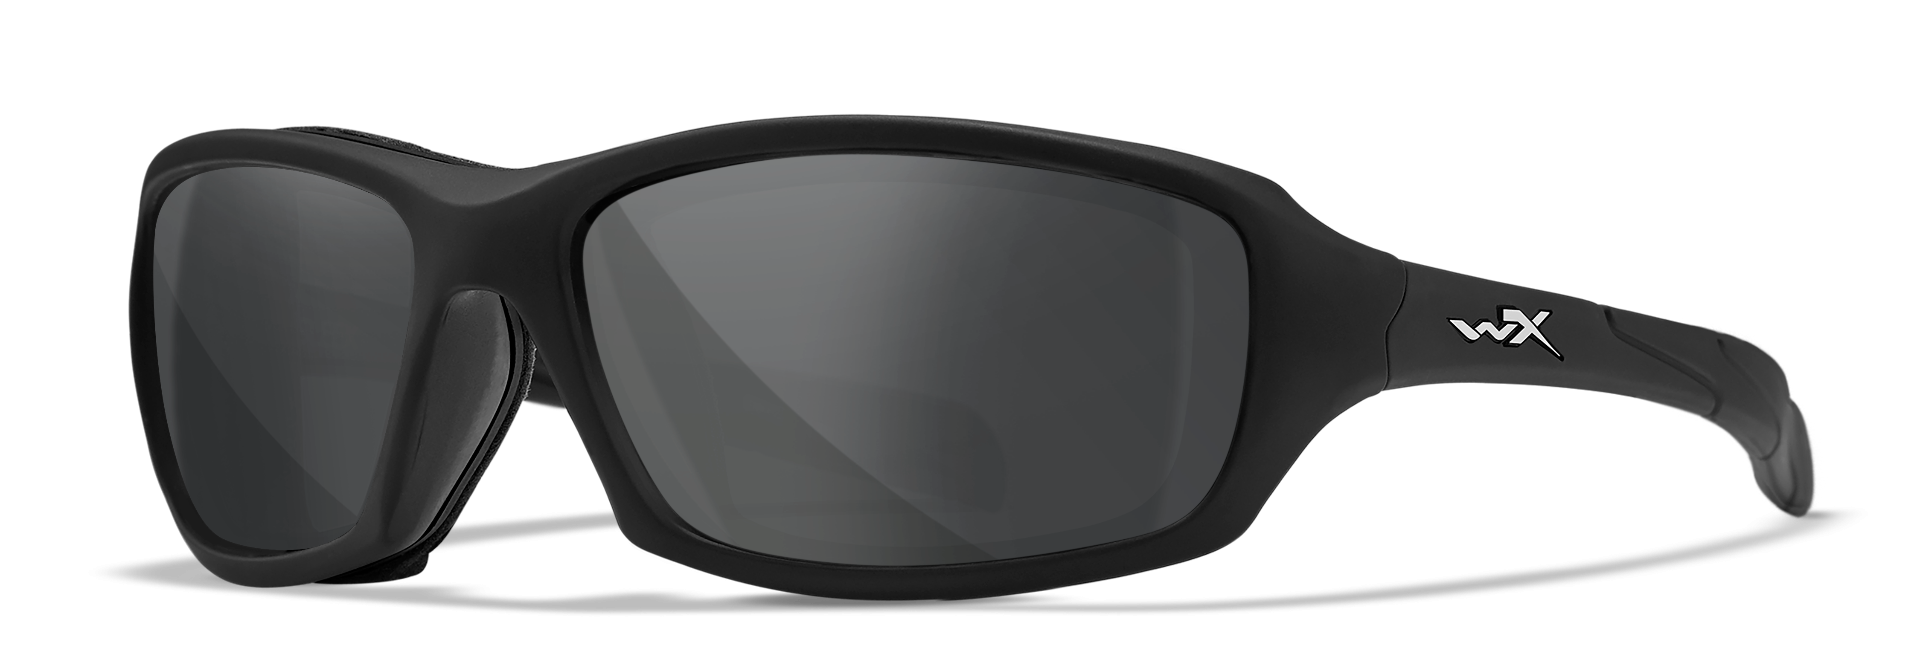 Wiley X WX Sleek Matte Black Polycarbonate Sunglasses